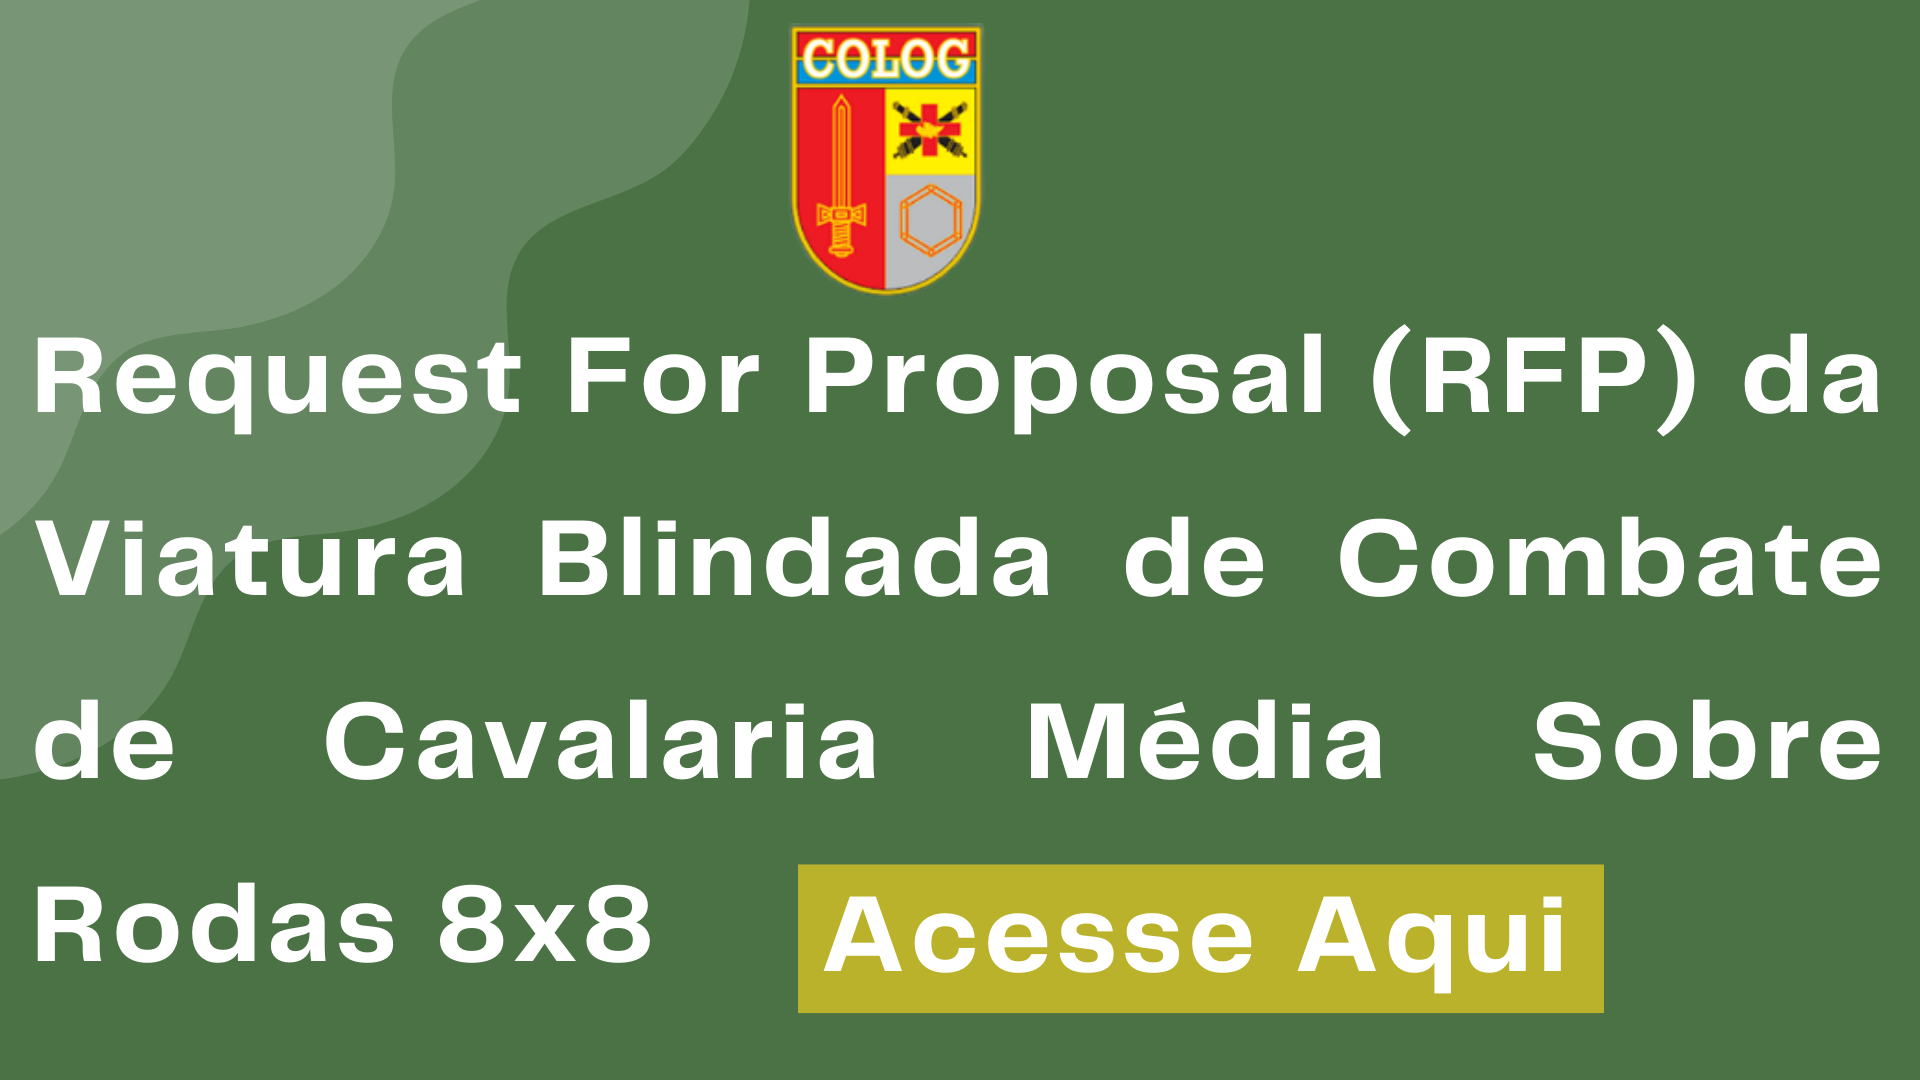 Request For Proposal (RFP) - Disponível em 20 JUL 22